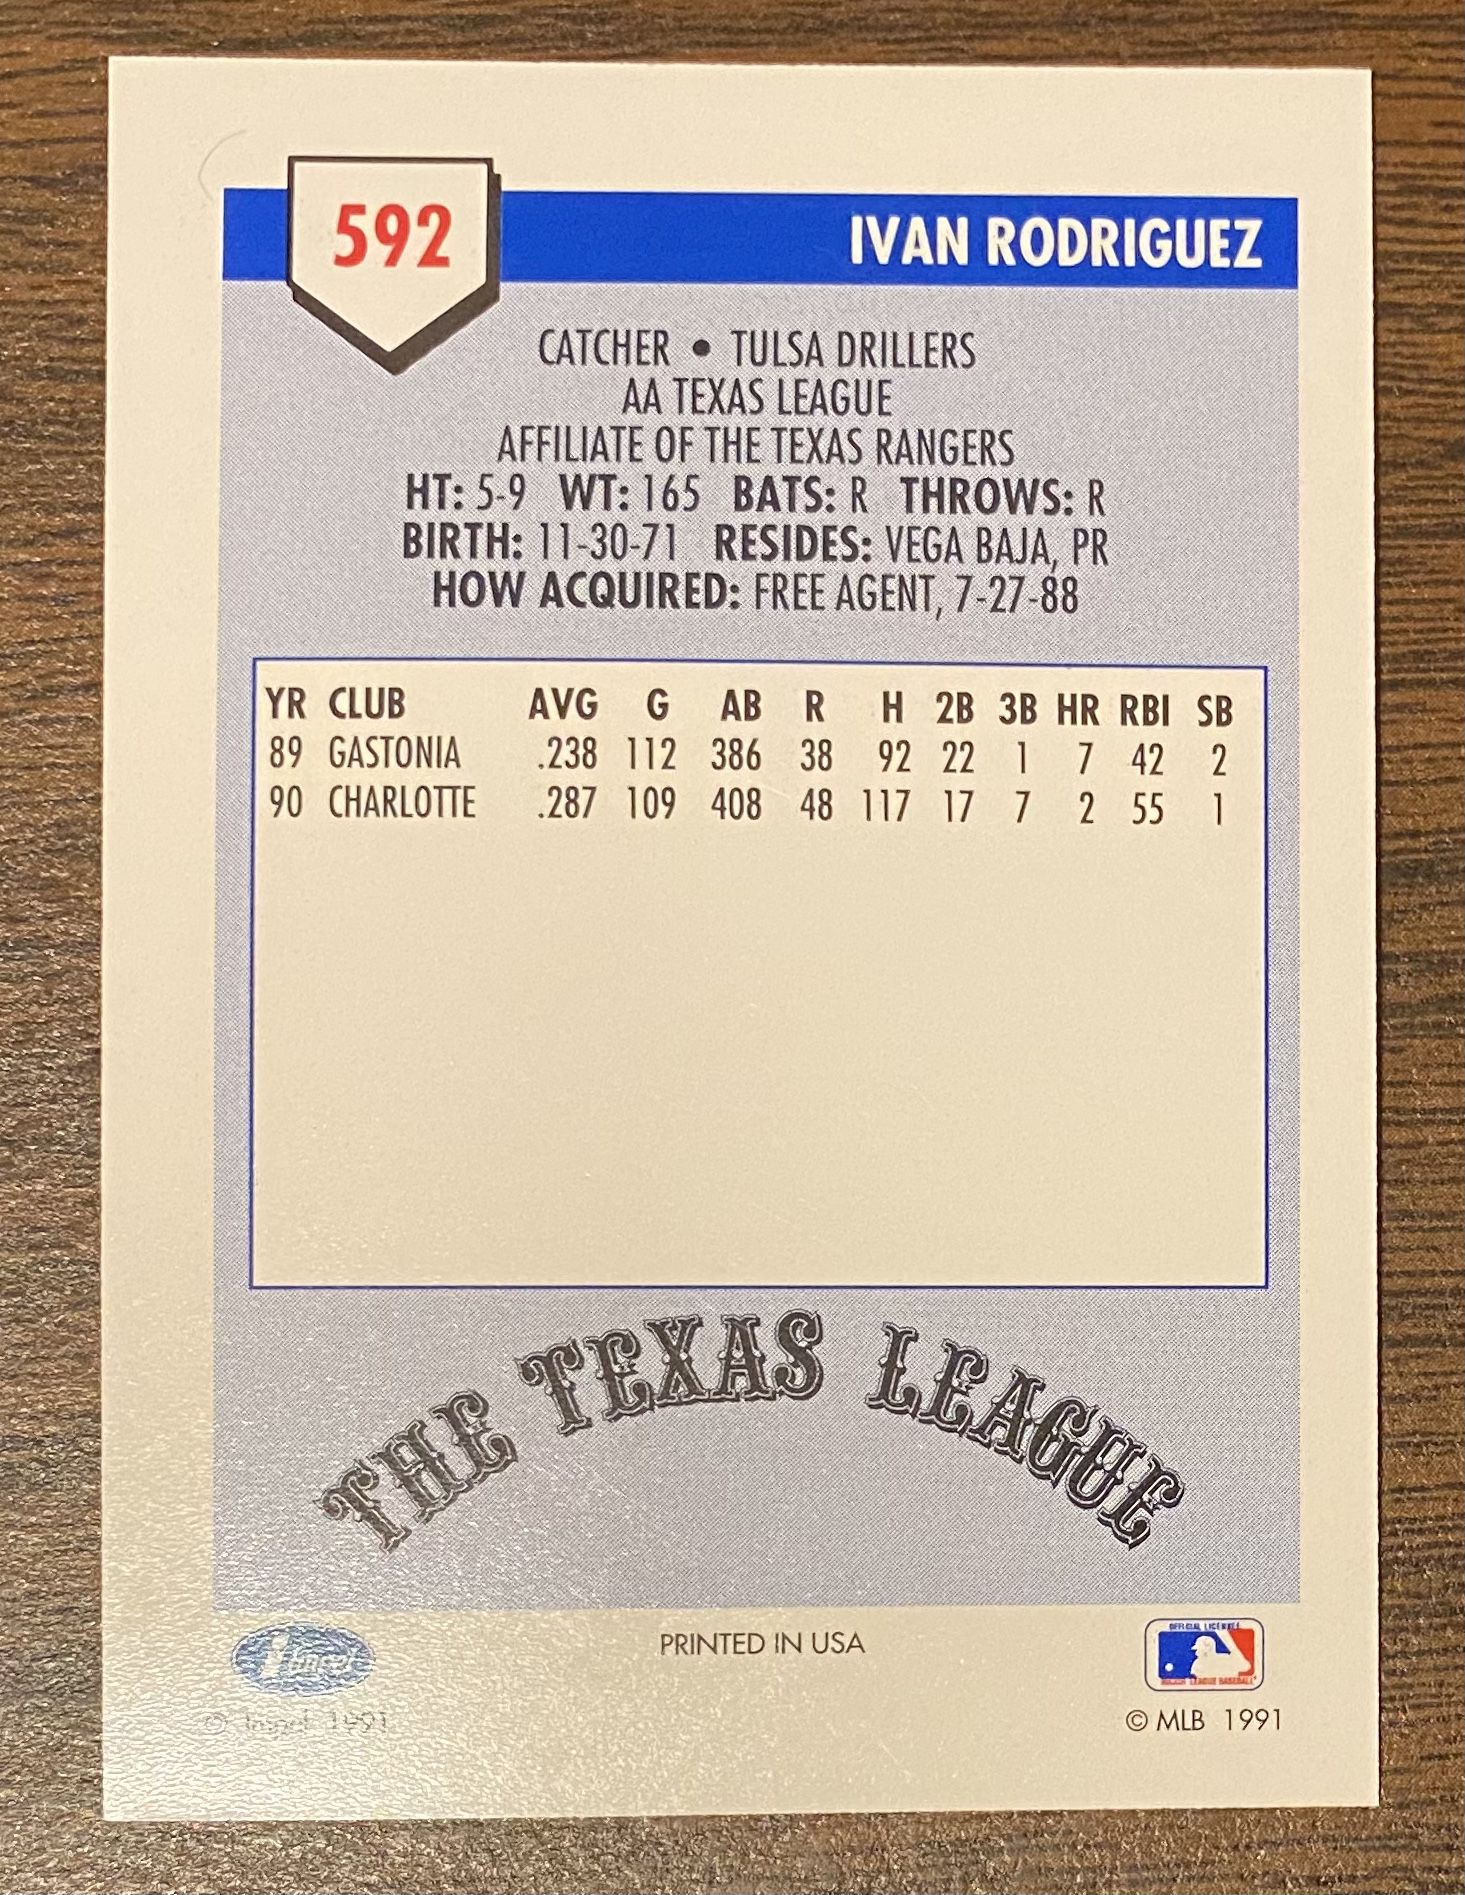 LOT OF 3 IVAN “PUDGE” RODRIGUEZ 1991 MINOR LEAGUE ROOKIE BASEBALL CARDS HOF x 3 